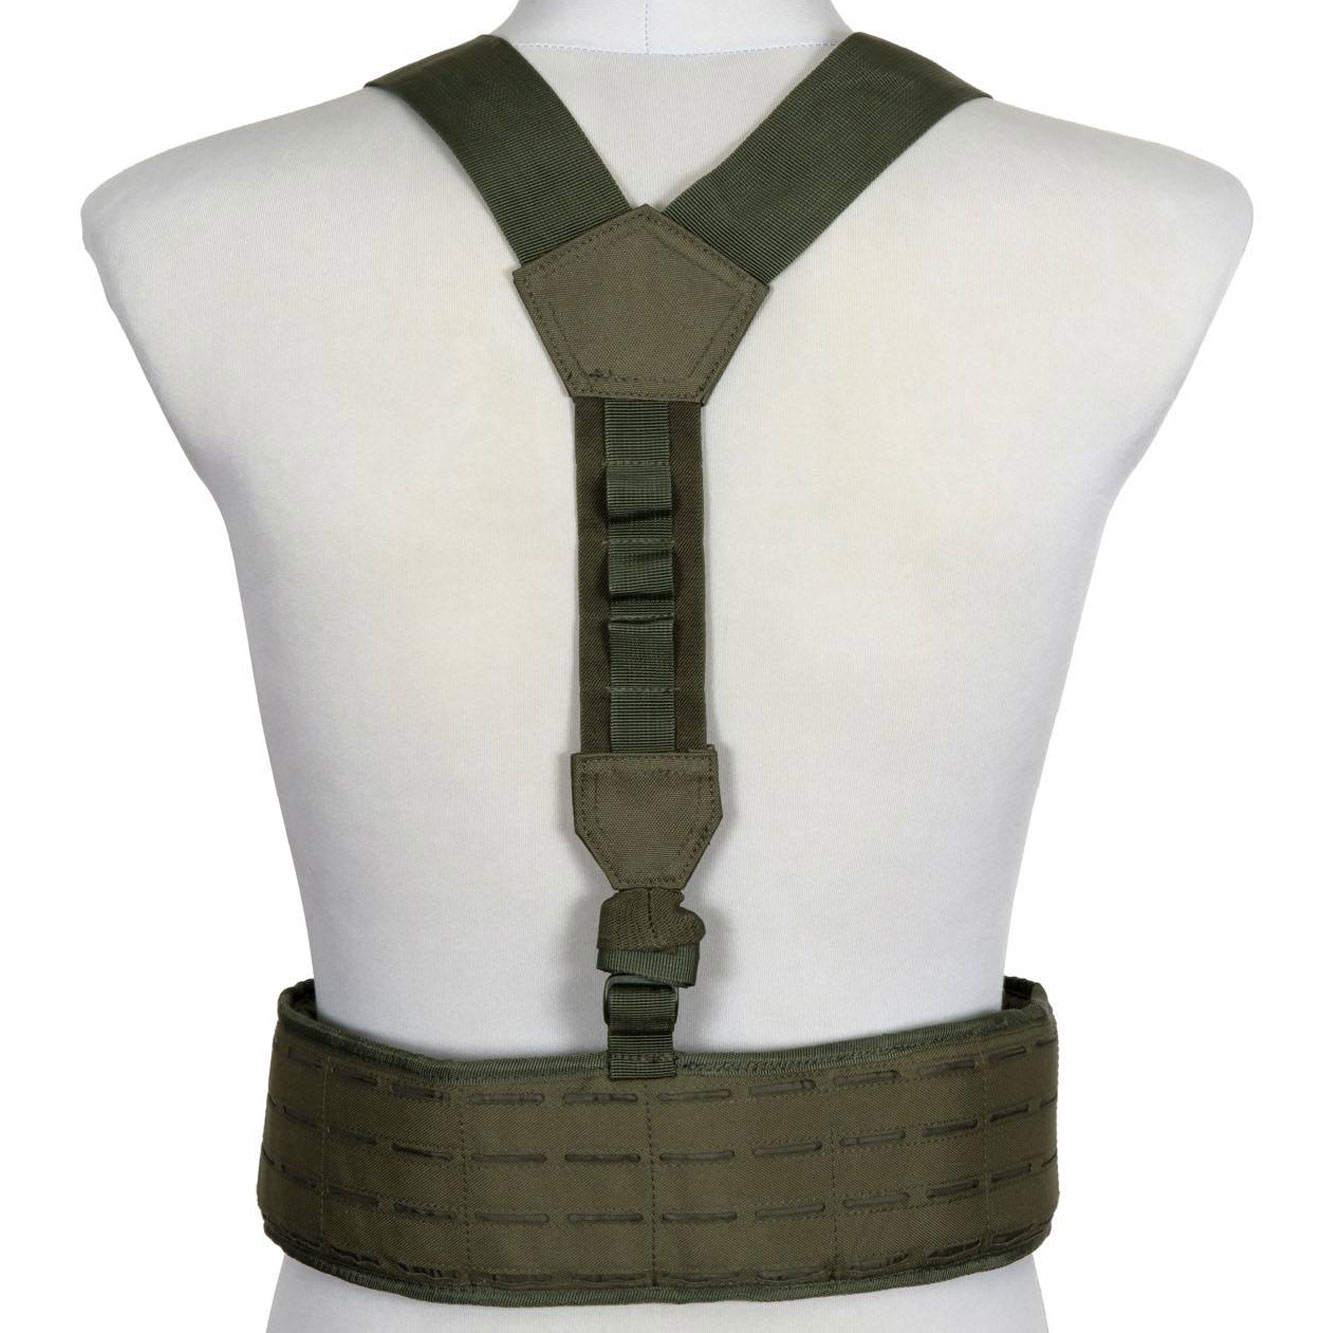 Pas taktyczny Viper Tactical Skeleton Harness Set - Olive